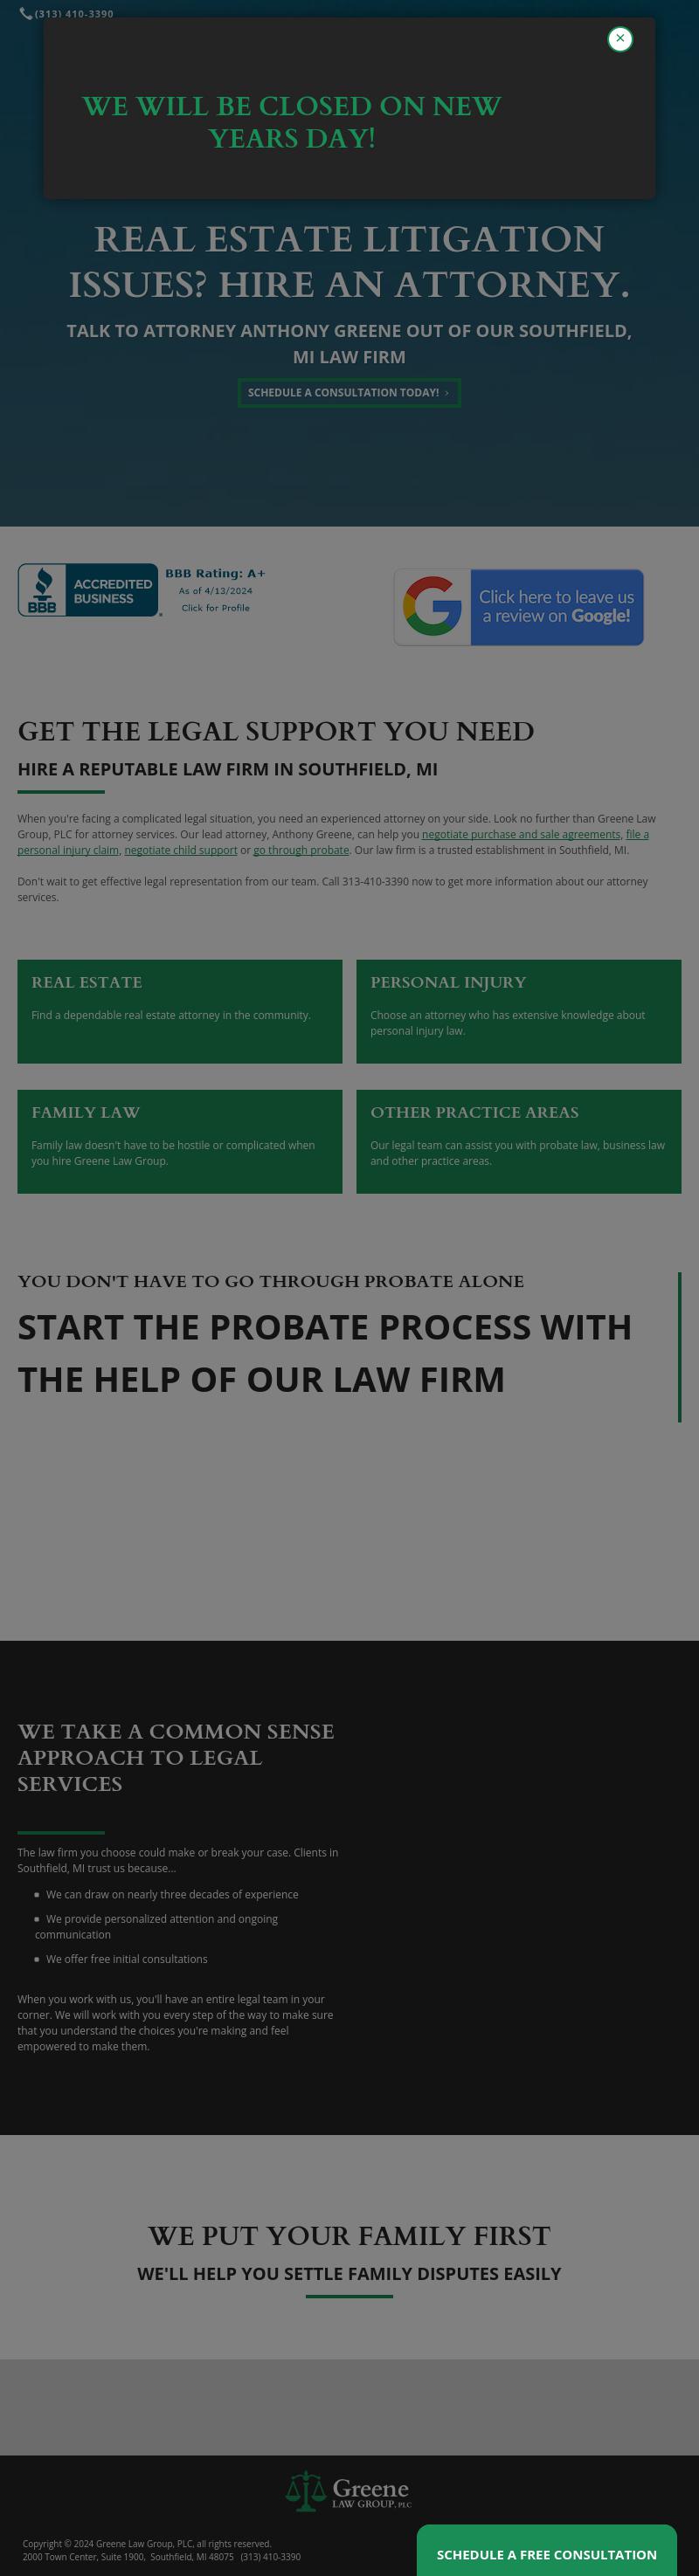 Greene Law Group, PLC - Ann Arbor MI Lawyers